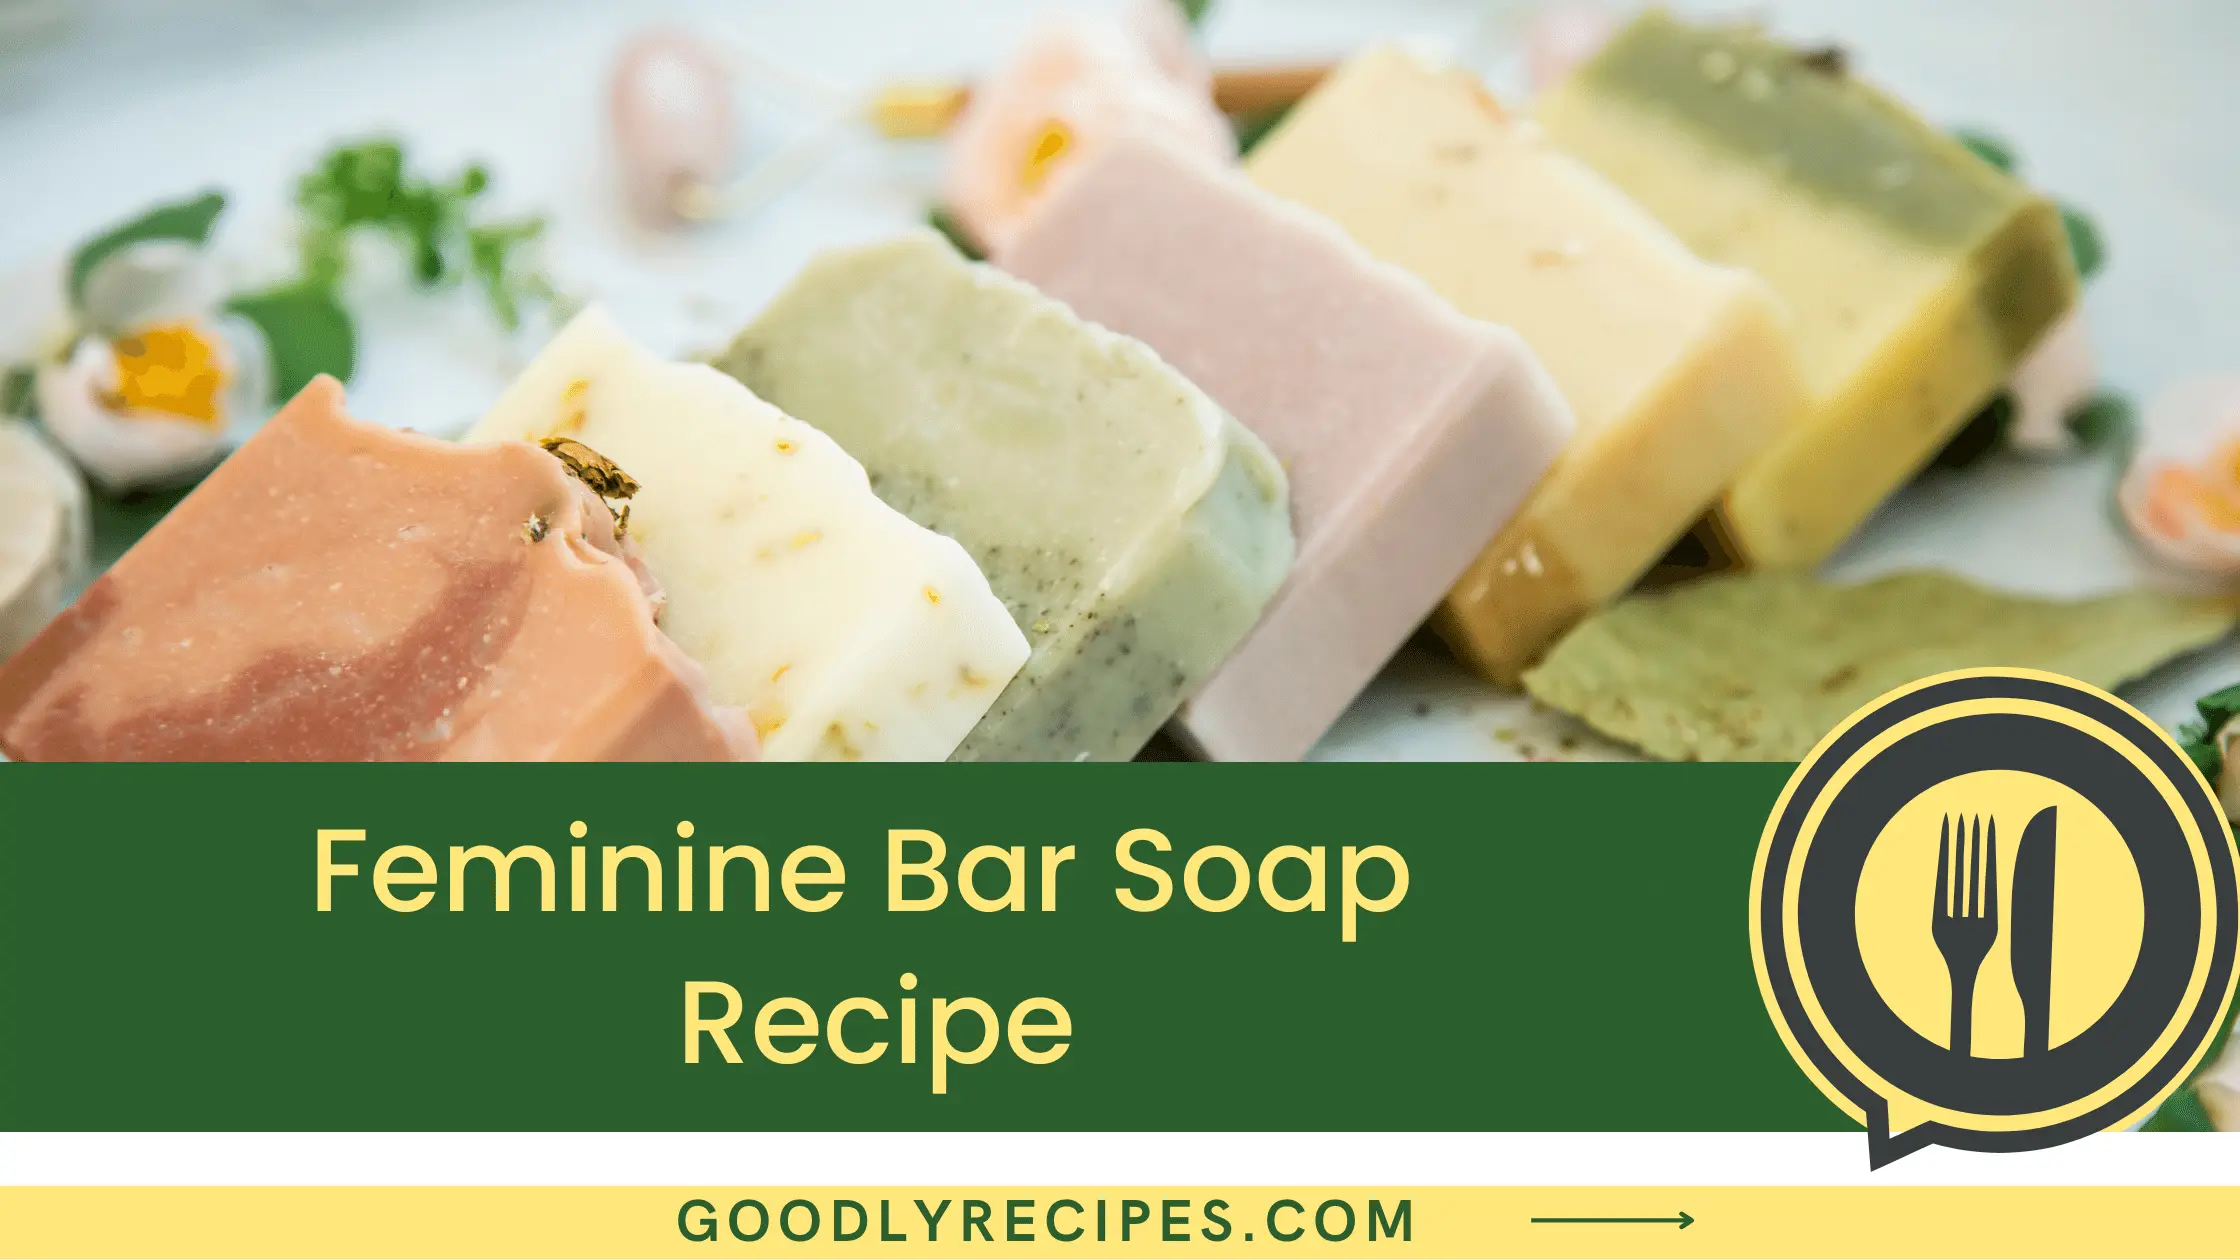 Feminine Bar Soap Recipe - For Food Lovers